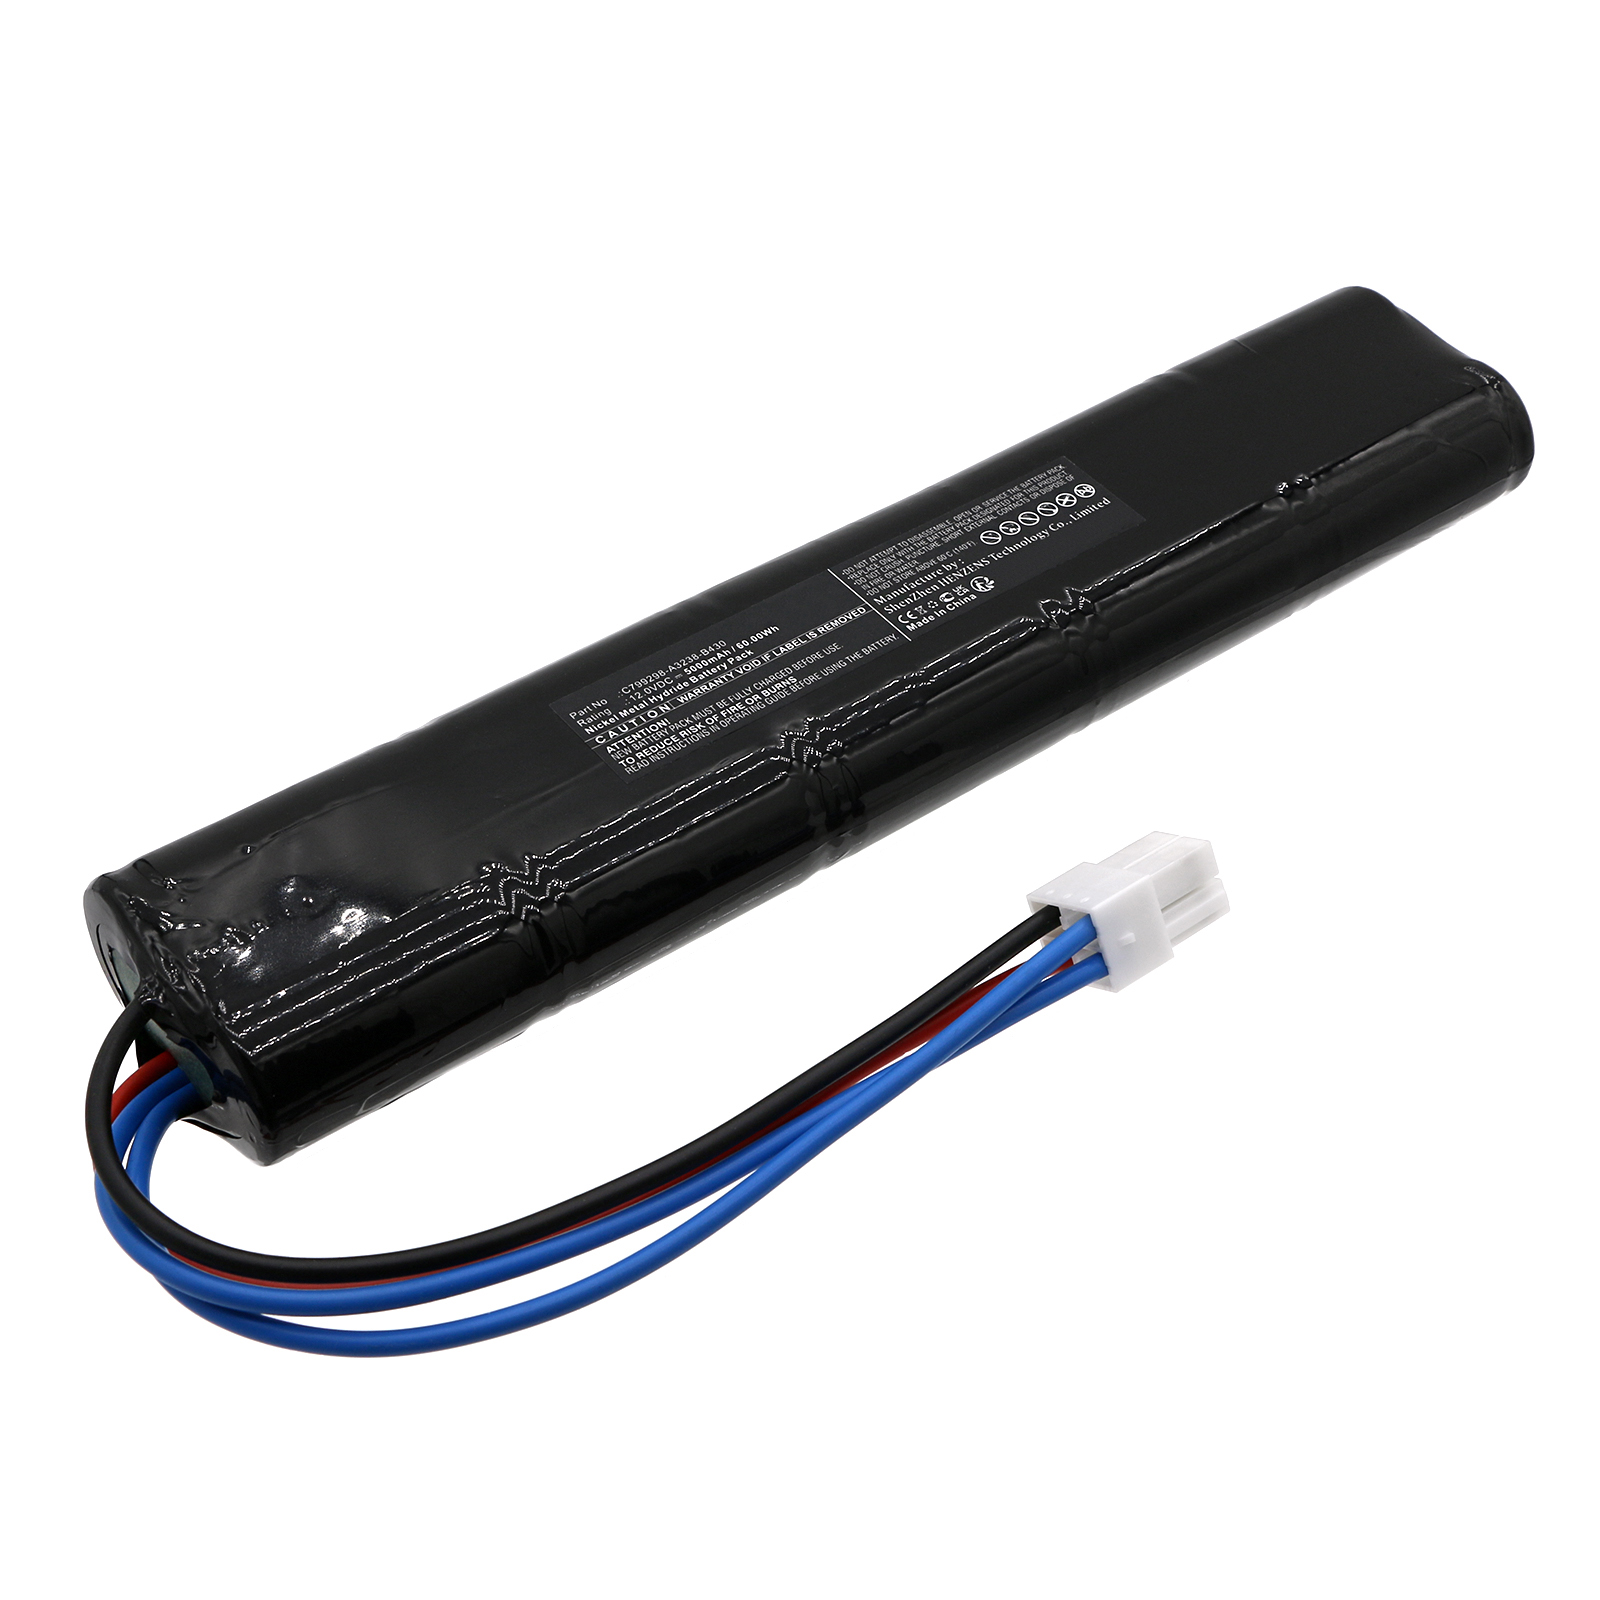 Synergy Digital Diagnostic Scanner Battery, Compatible with Siemens C79298-A3238-B430 Diagnostic Scanner Battery (Ni-MH, 12V, 5000mAh)